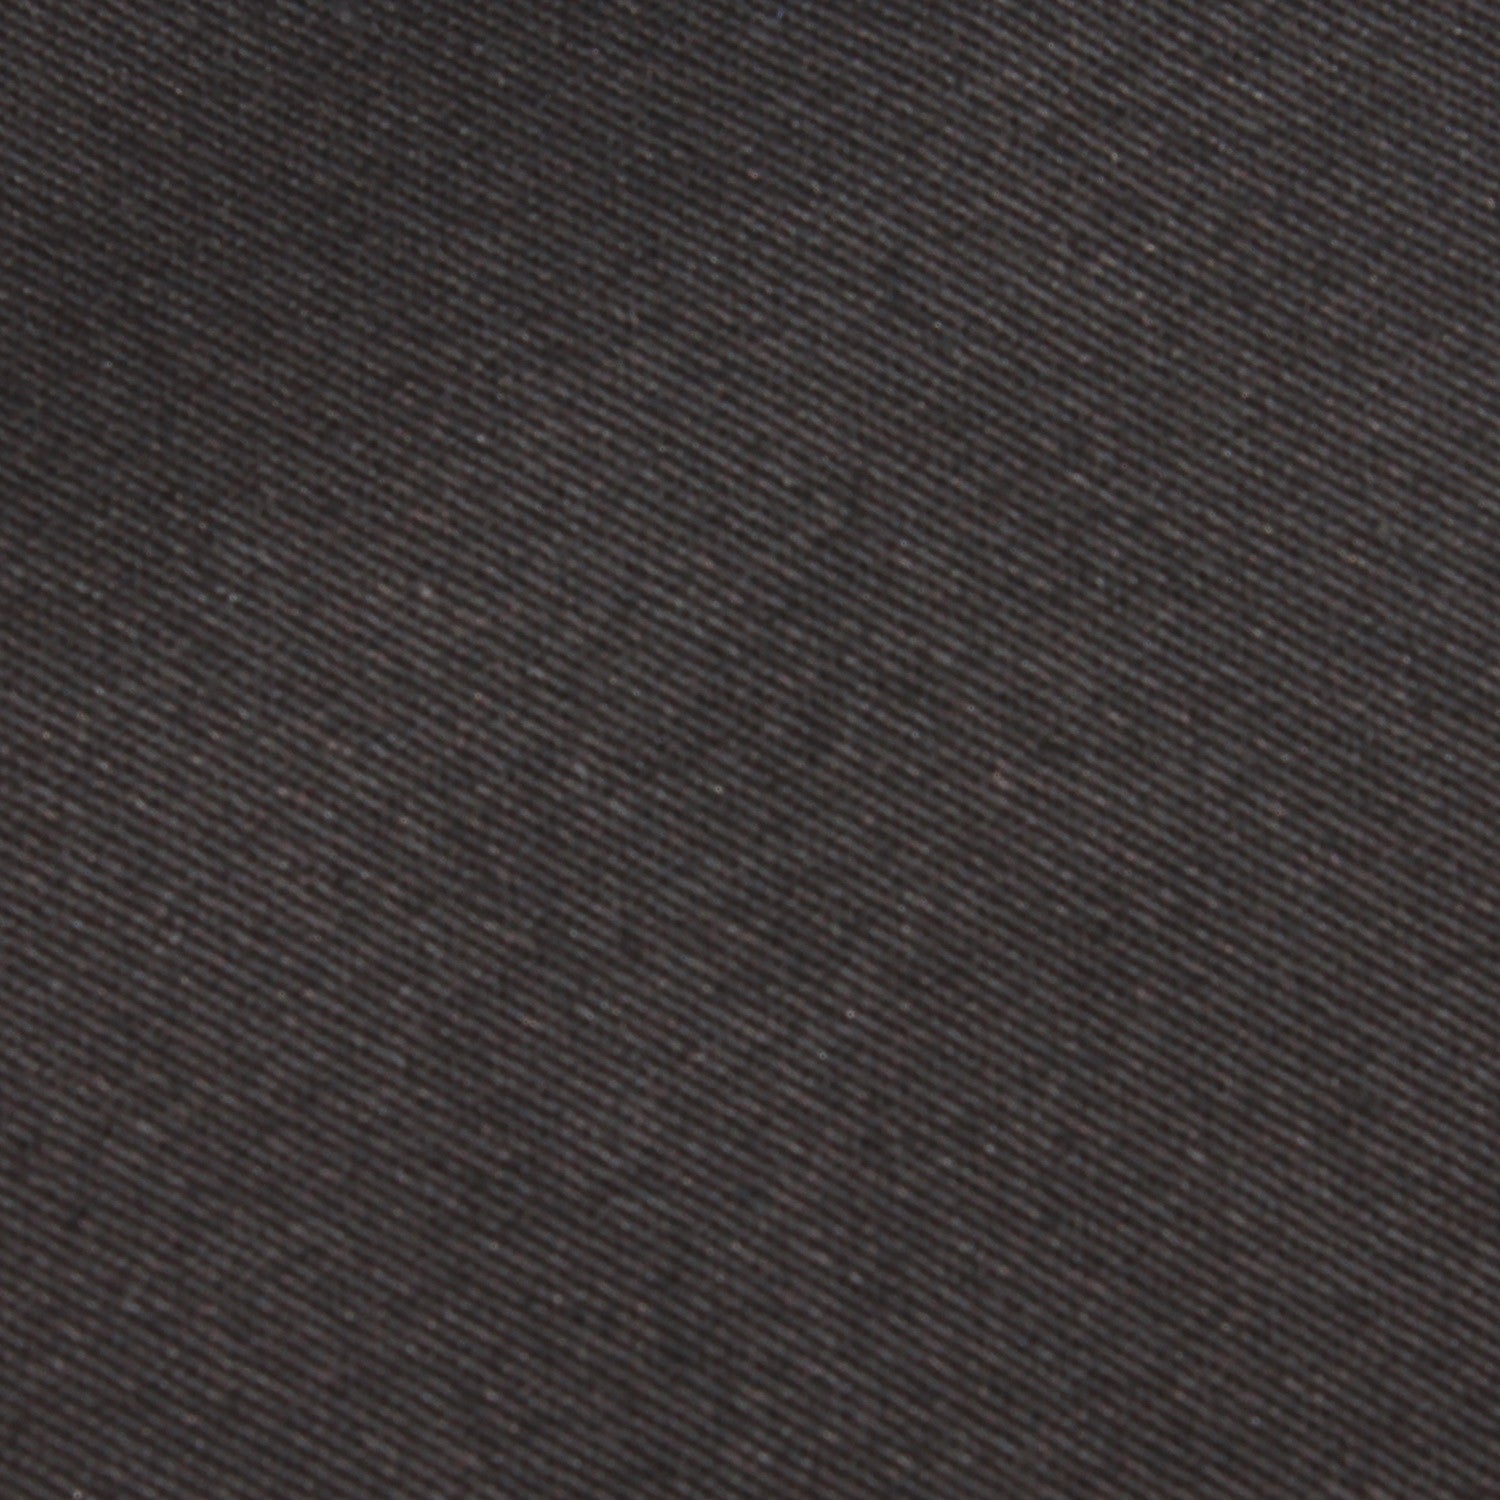 Black Cotton Fabric Skinny Tie C012